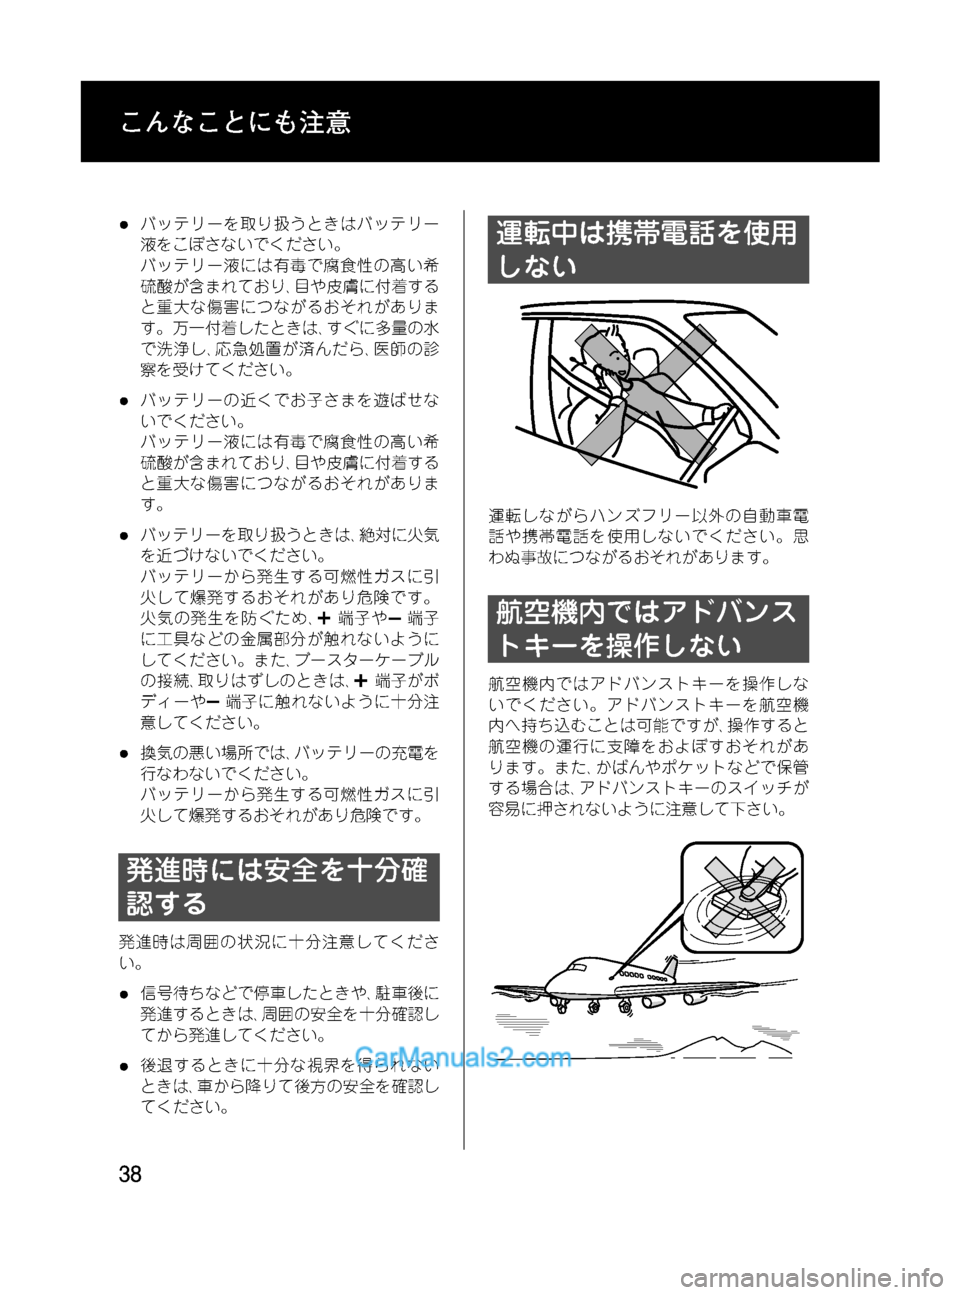 MAZDA MODEL VERISA 2007  ベリーサ｜取扱説明書 (in Japanese) Black plate (38,1)
lバッテリーを取り扱うときはバッテリー
液をこぼさないでください。
バッテリー液には有毒で腐食性の高い希
硫酸が含まれており､